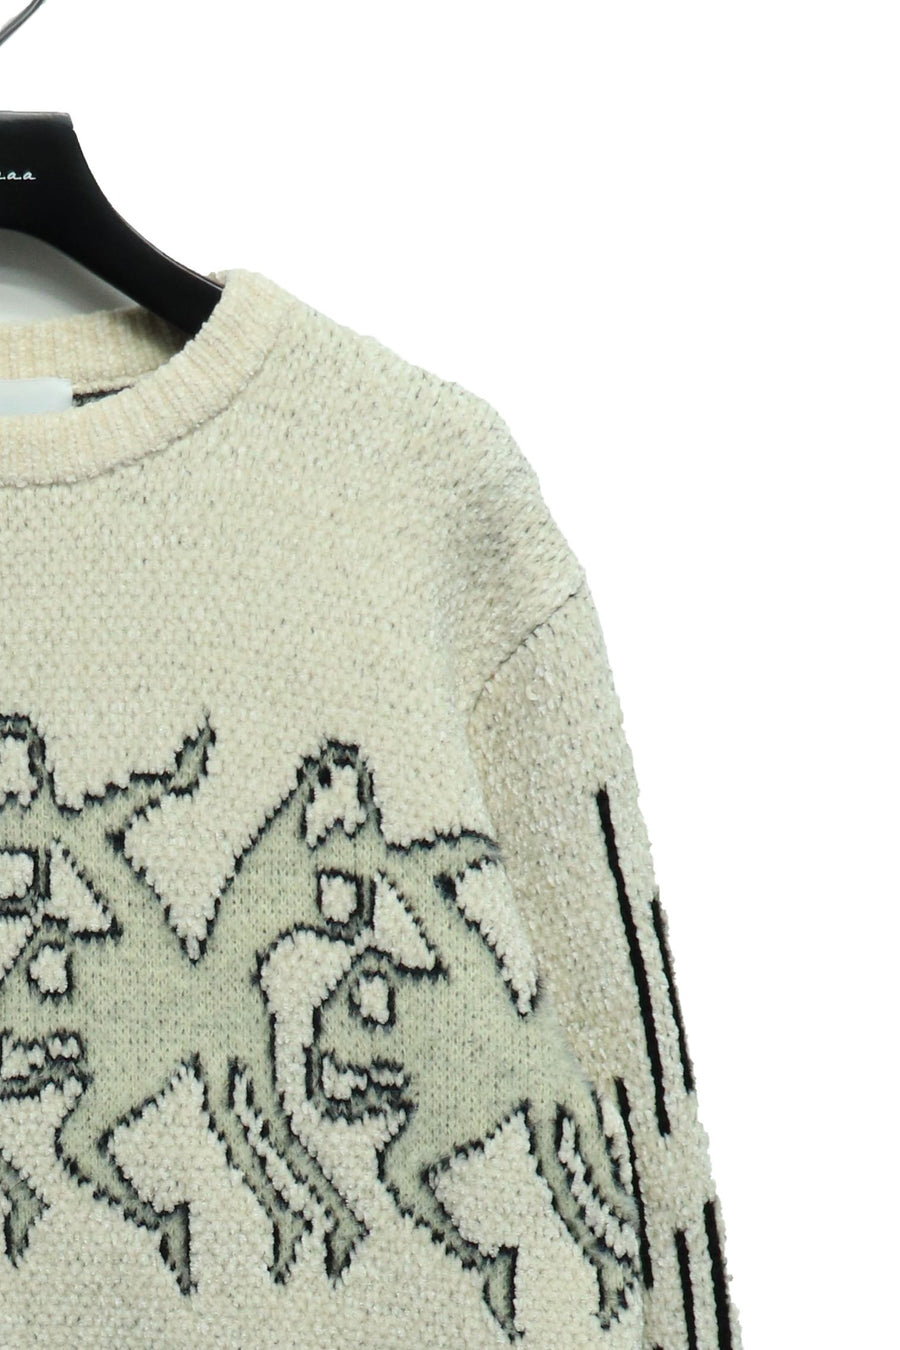 TOGA VIRILIS(トーガ ビリリース)22awのJaquard knit pullover WHITE ...